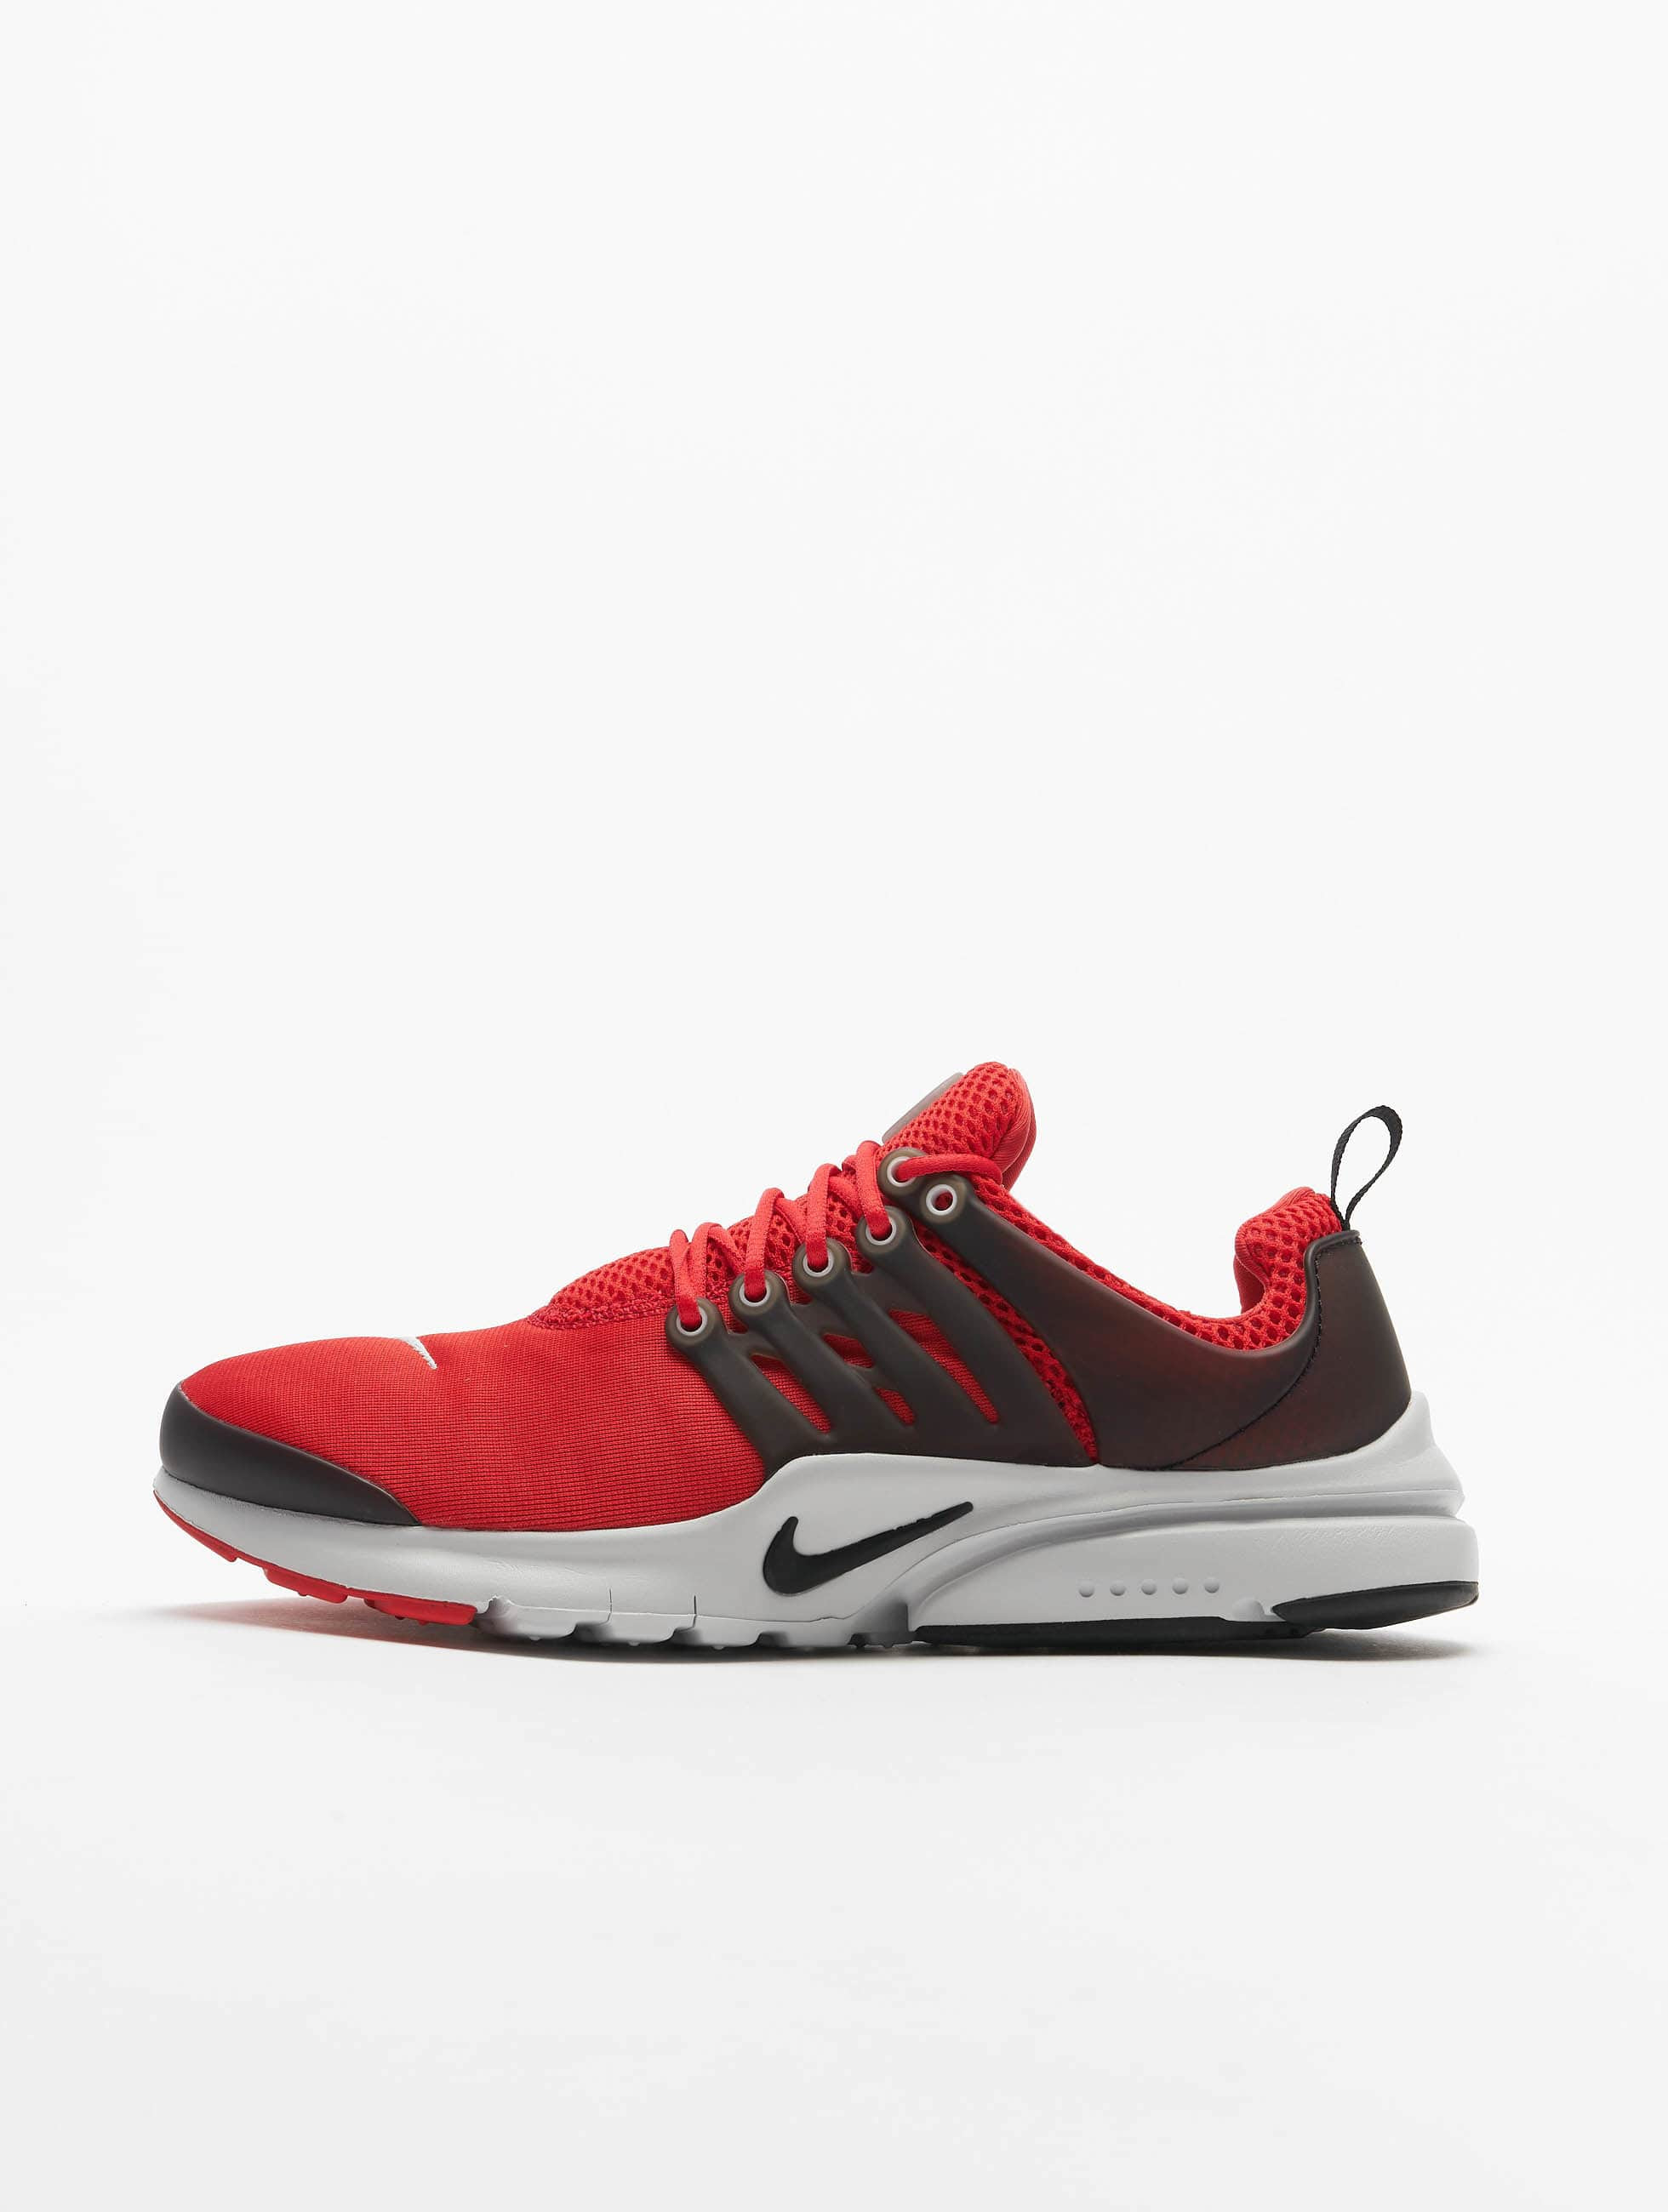 pariteit complexiteit Clam Nike schoen / sneaker Presto (GS) in rood 824482